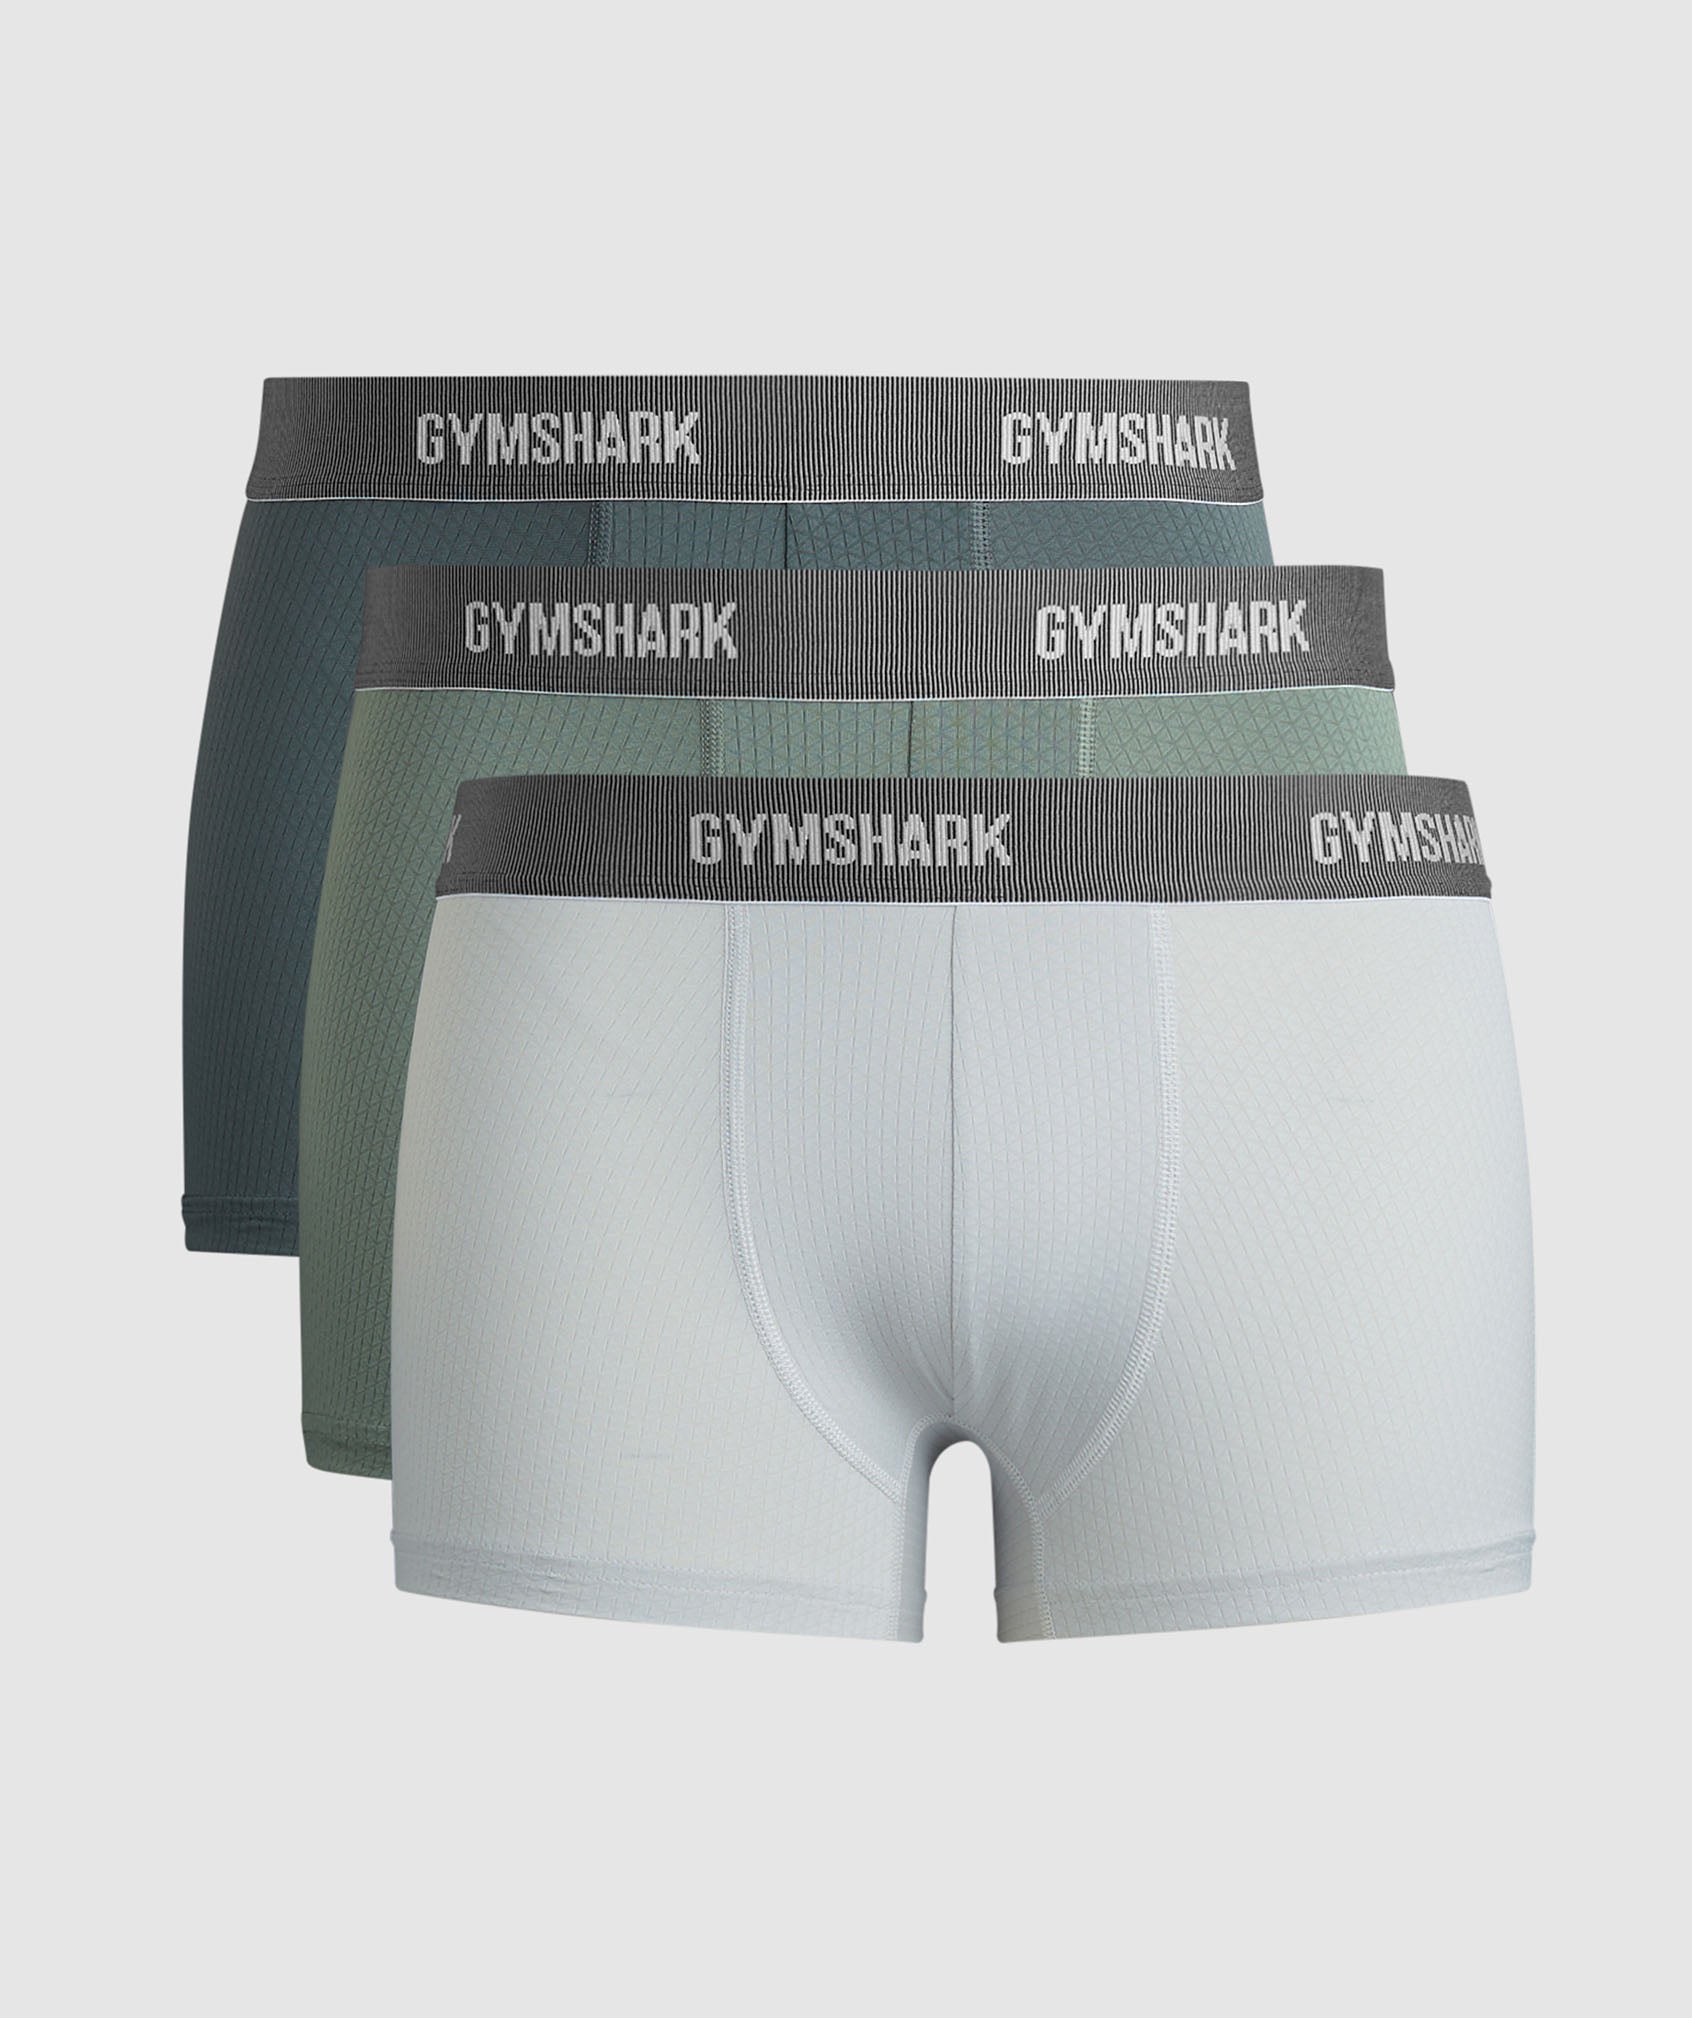 Gymshark Boxers 2pk - Black